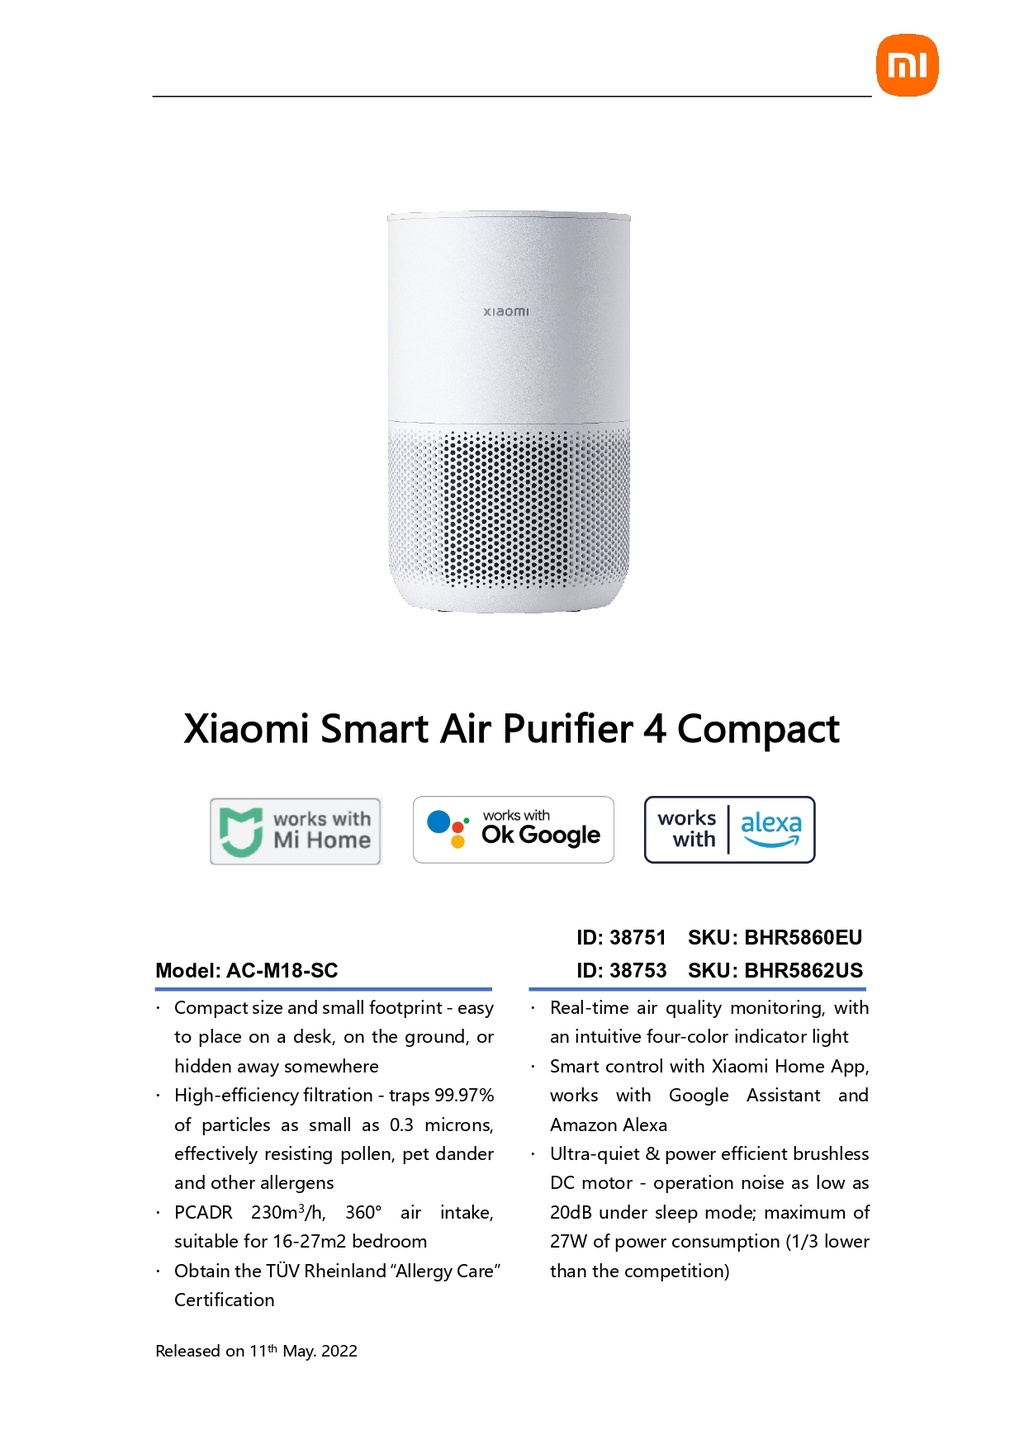 Xiaomi Smart Air Purifier 4 Compact Received TÜV Rheinland Allergy